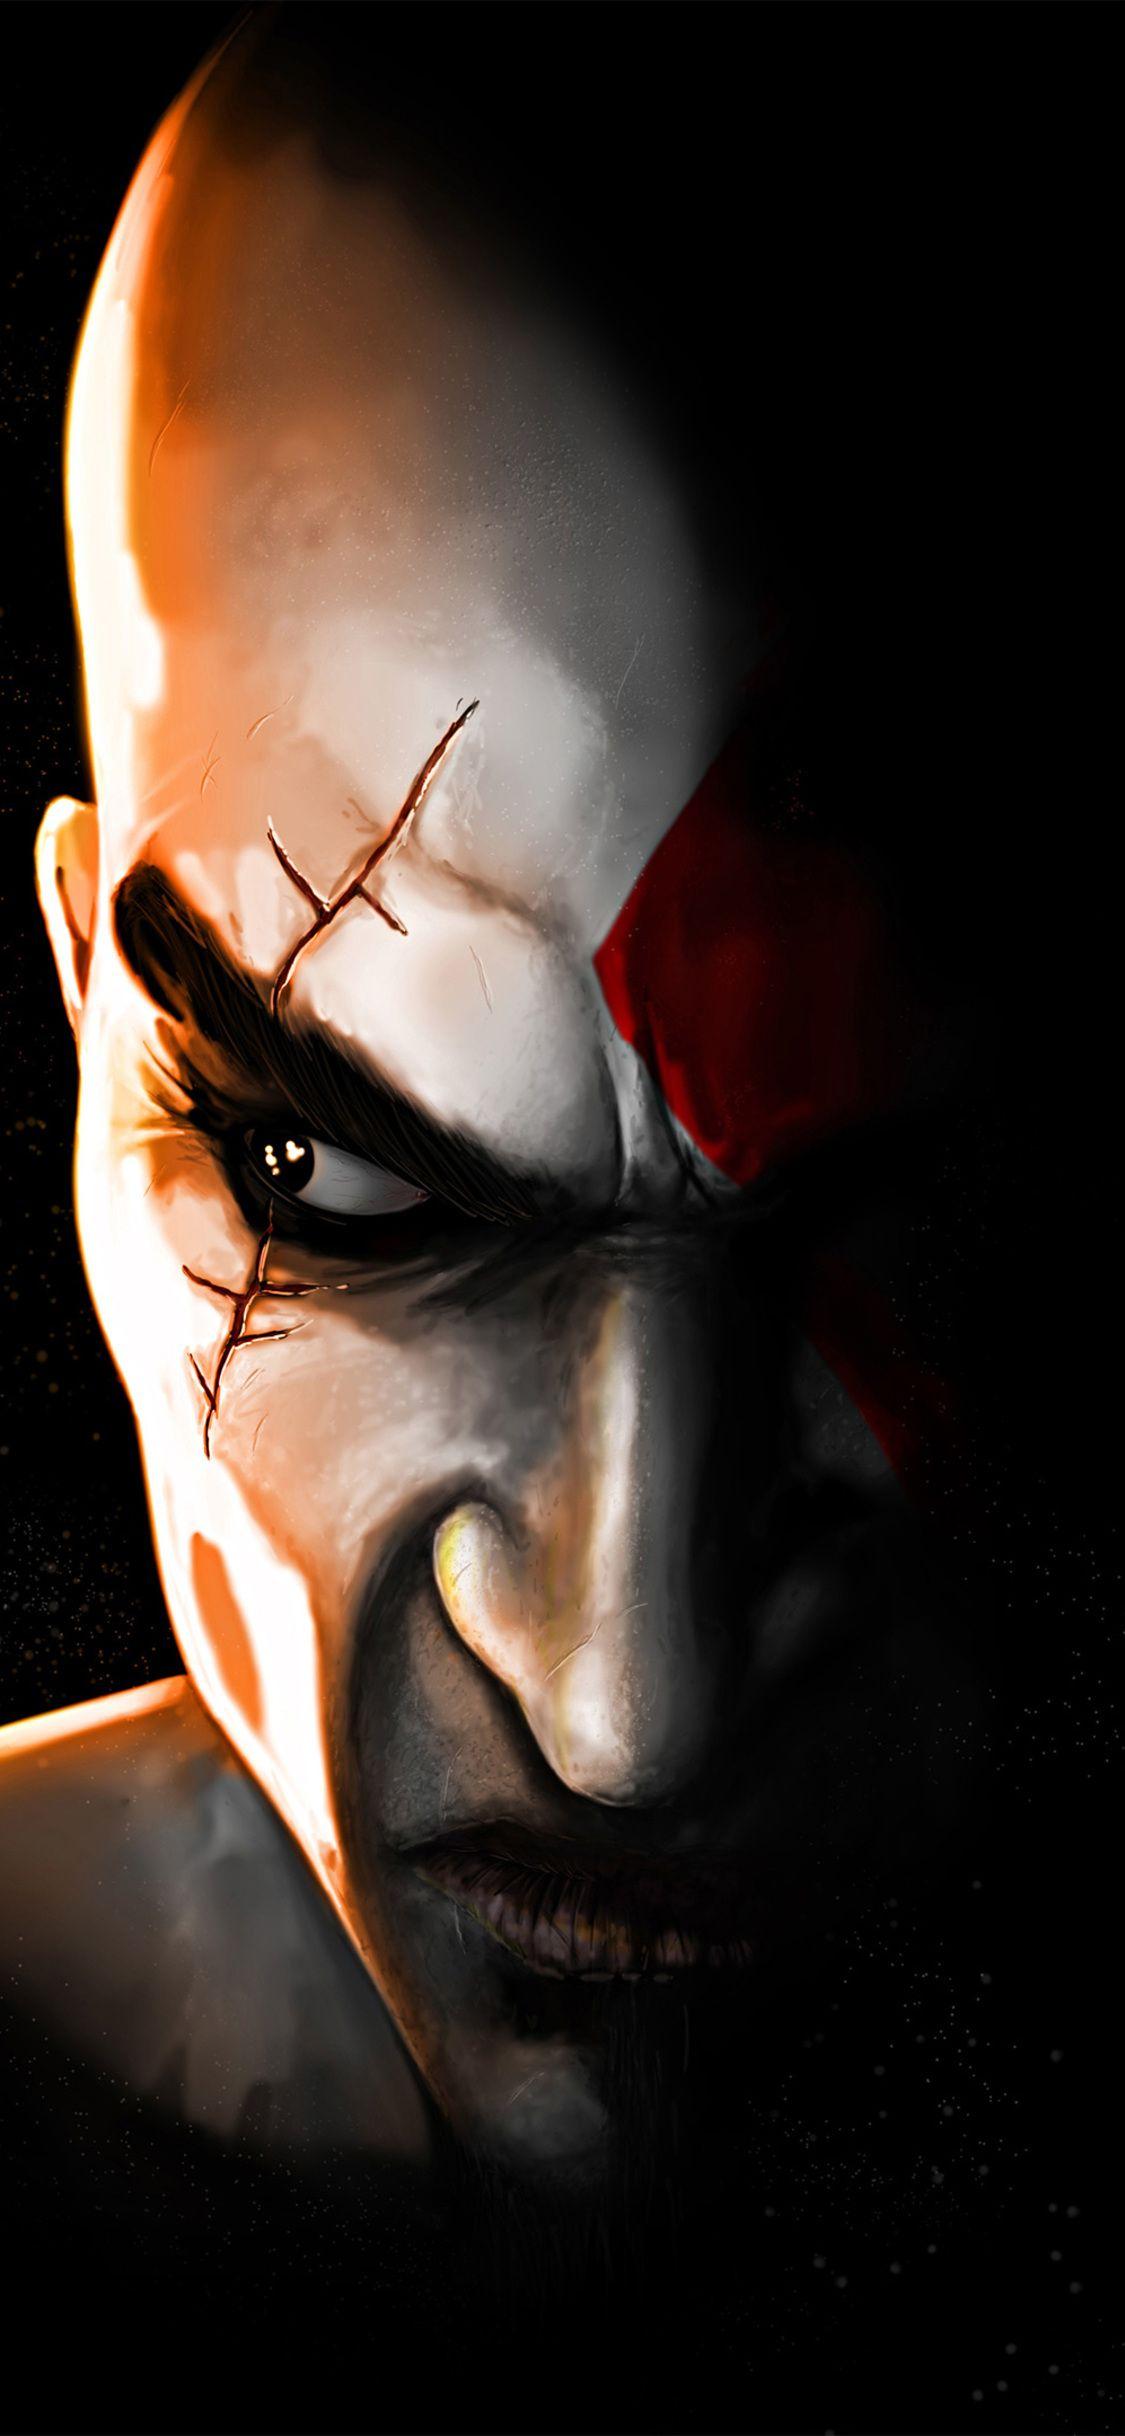 desktophdwallpaper.org. Phone wallpaper image, Kratos god of war, Phone wallpaper